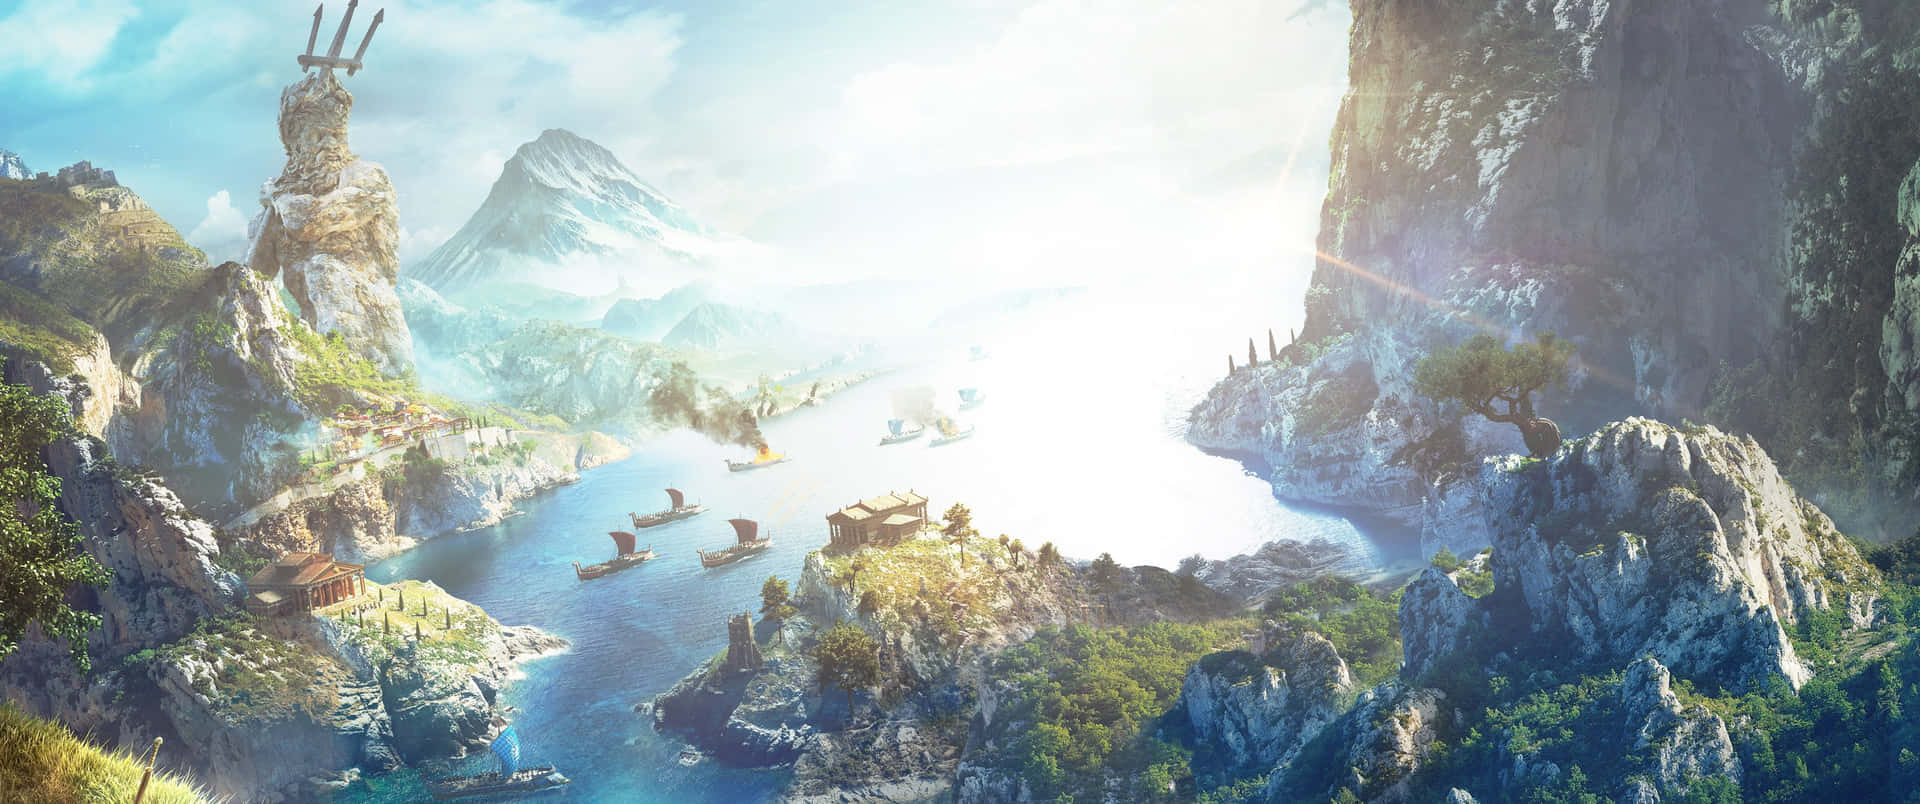 Paisajeoceánico De Assassin's Creed Odyssey Para Juegos En Ultra Panorámico. Fondo de pantalla